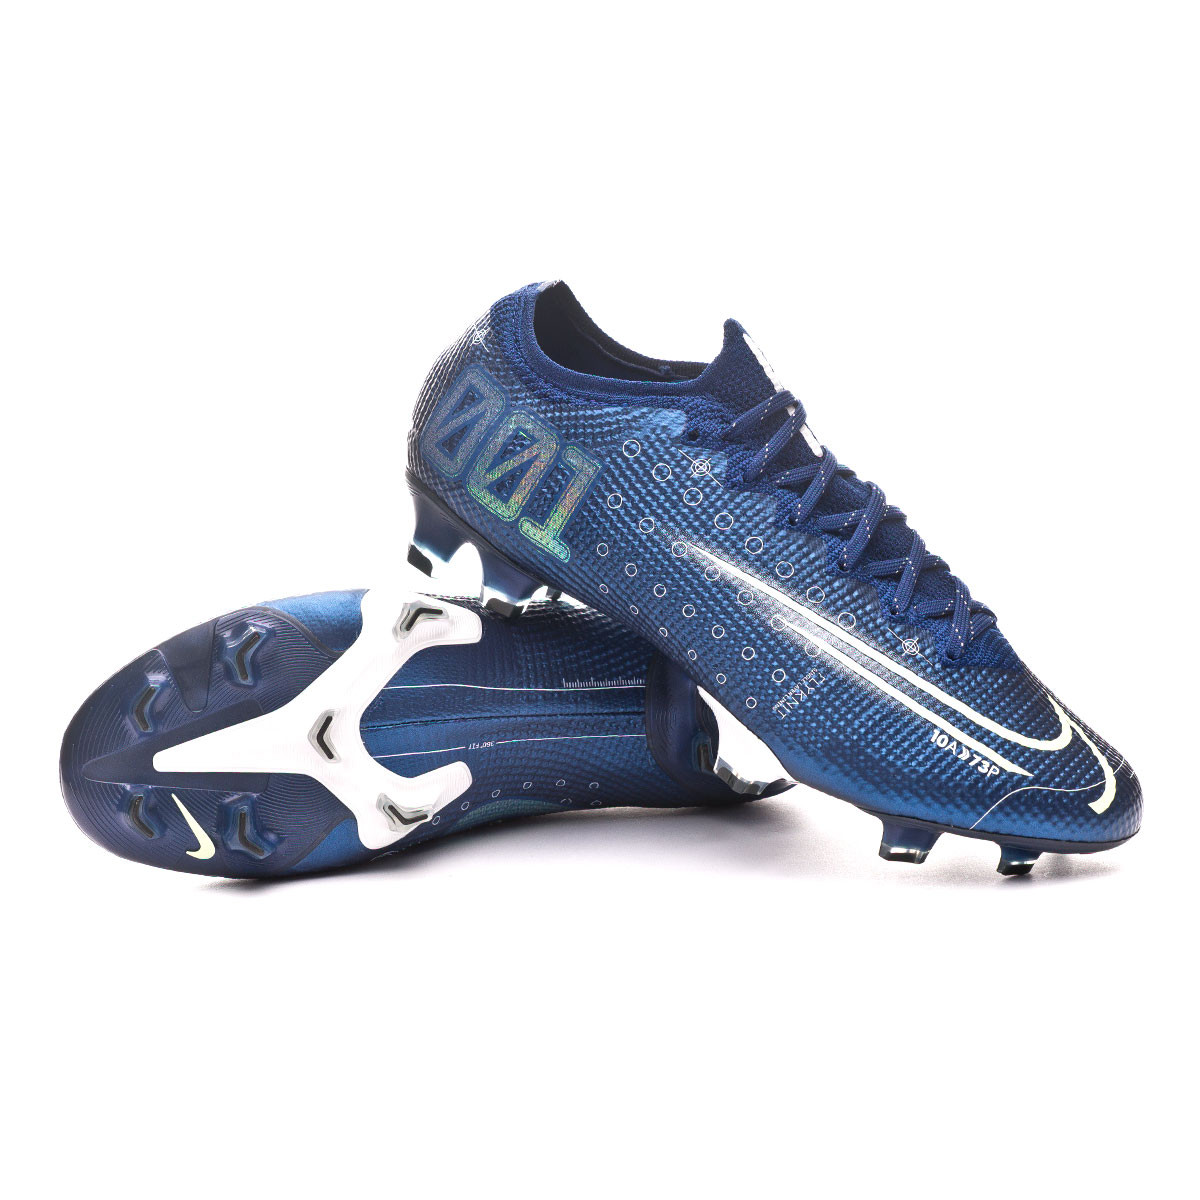 Football Boots Nike Mercurial Vapor Xiii Elite Mds Fg Blue Void